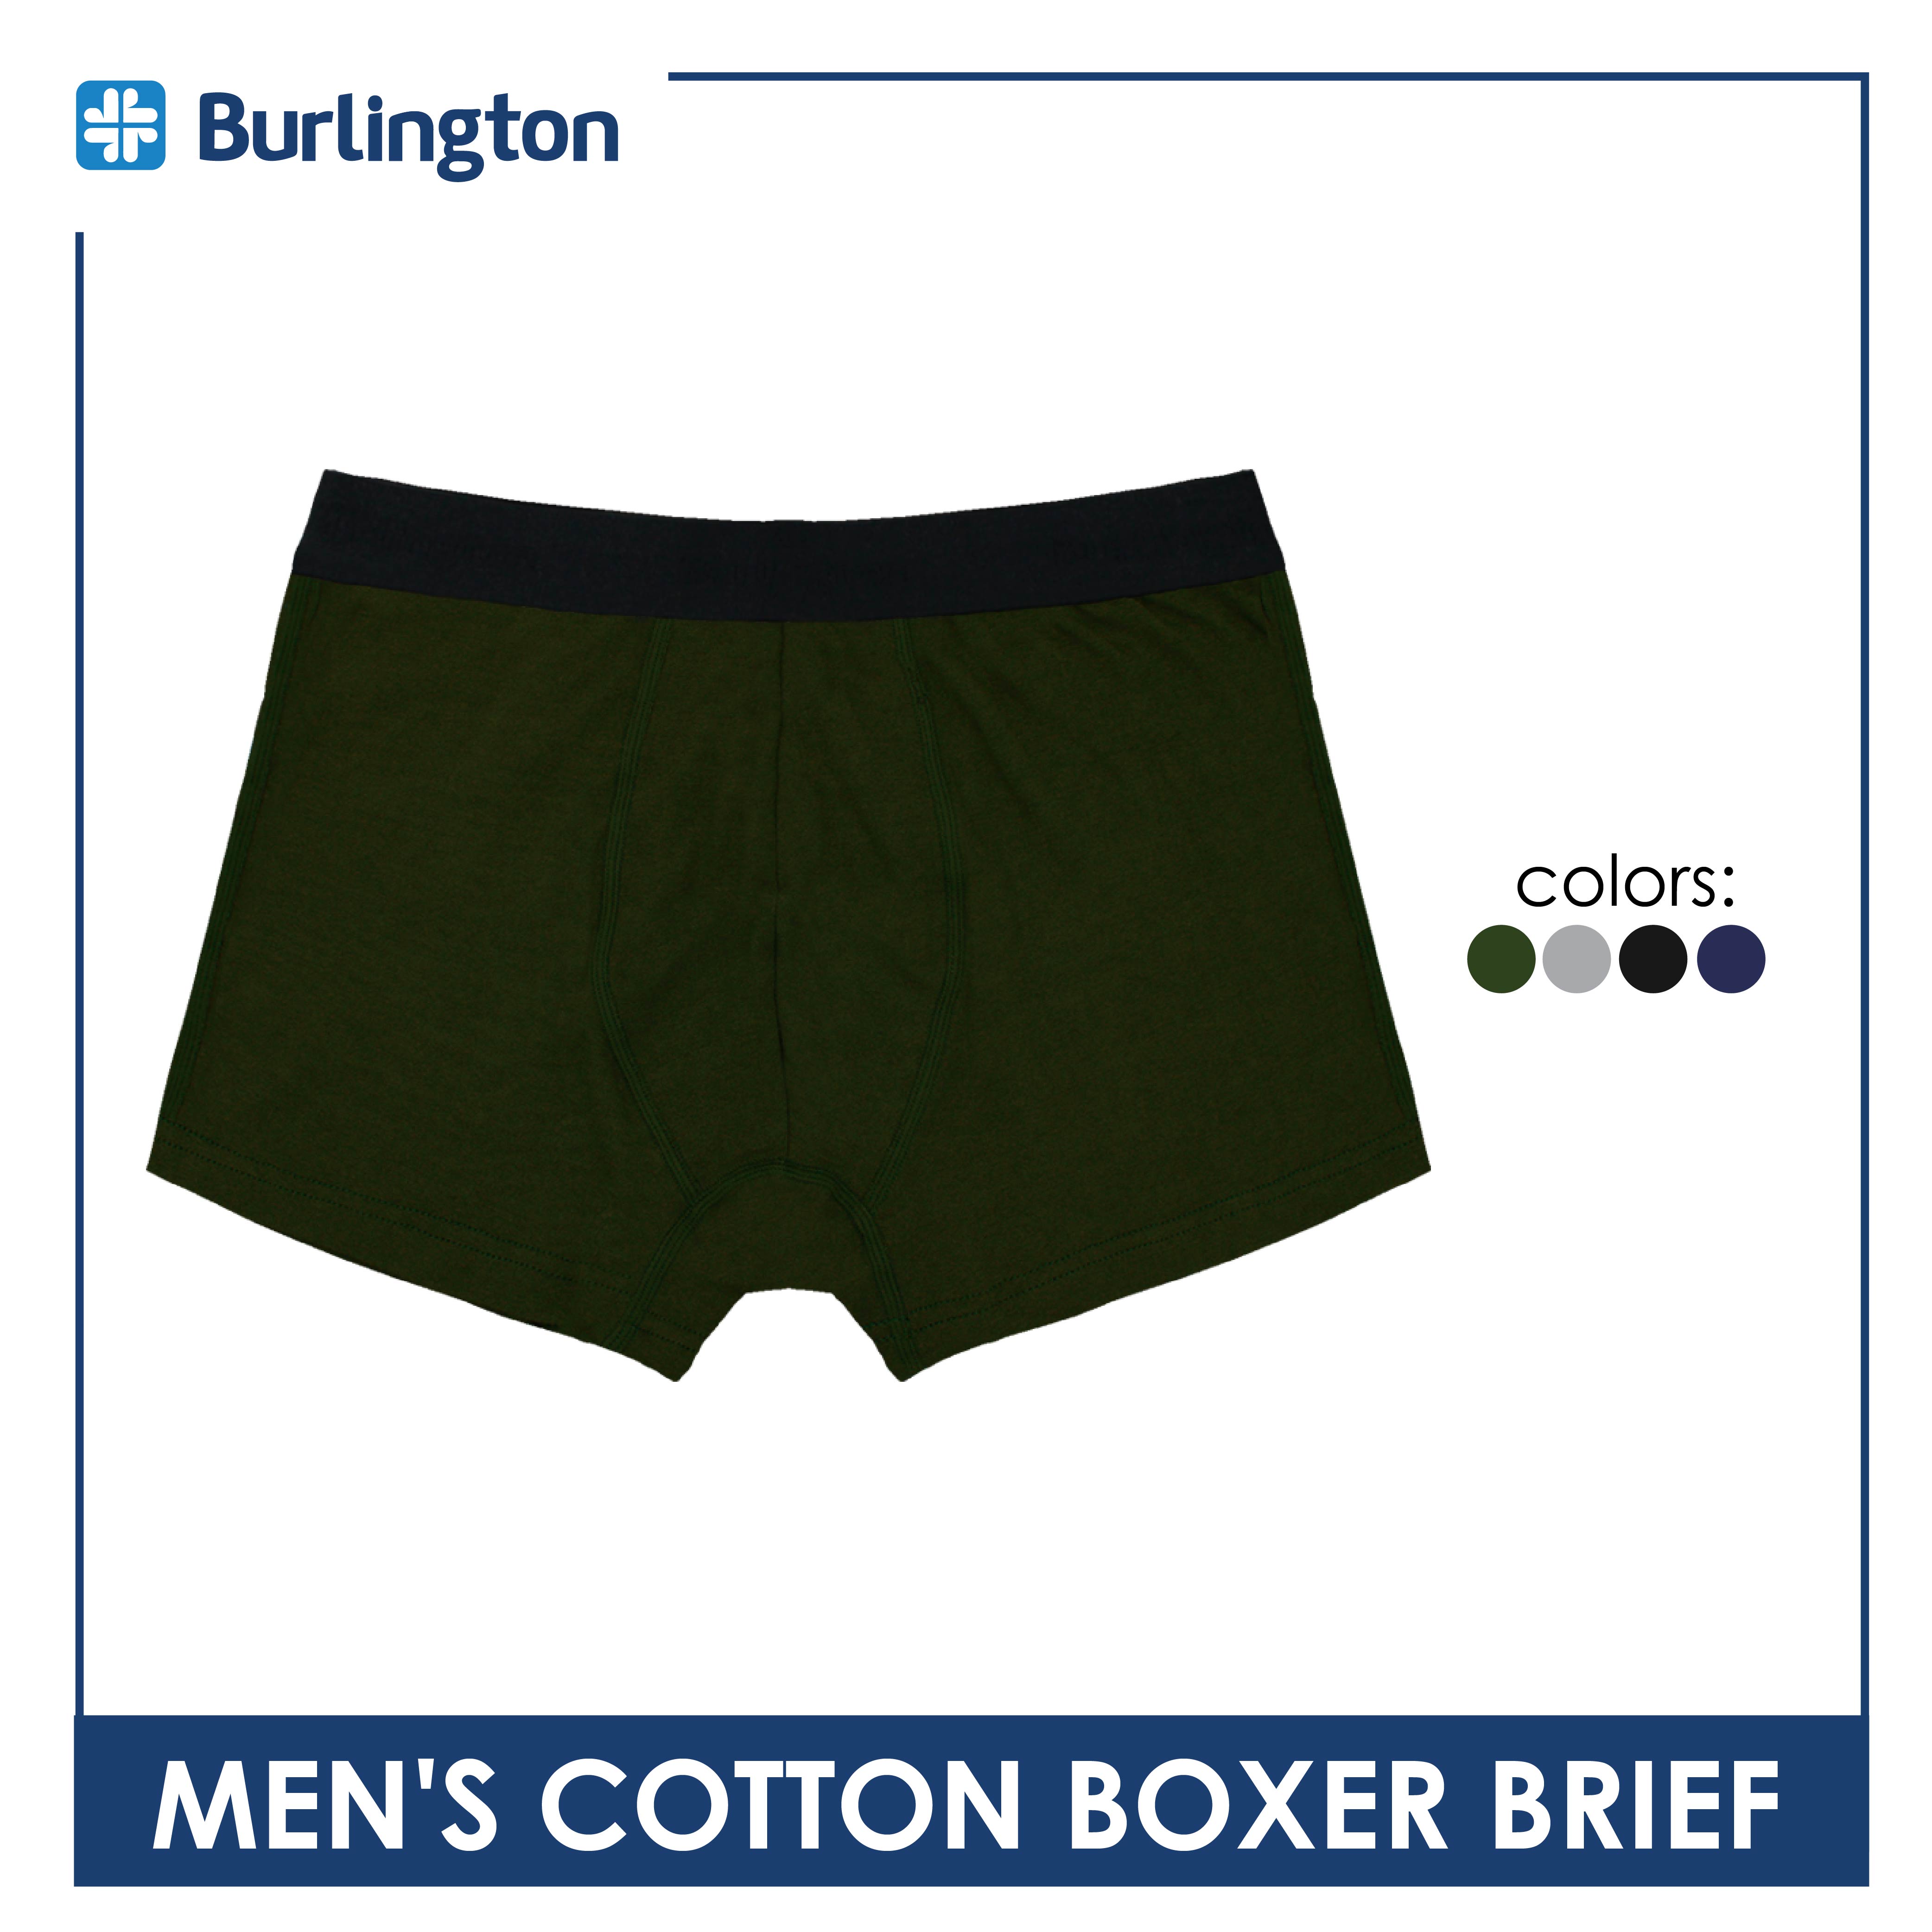 Biofresh Men's Antimicrobial Cotton Boxer Brief 1 piece OUMBB1201